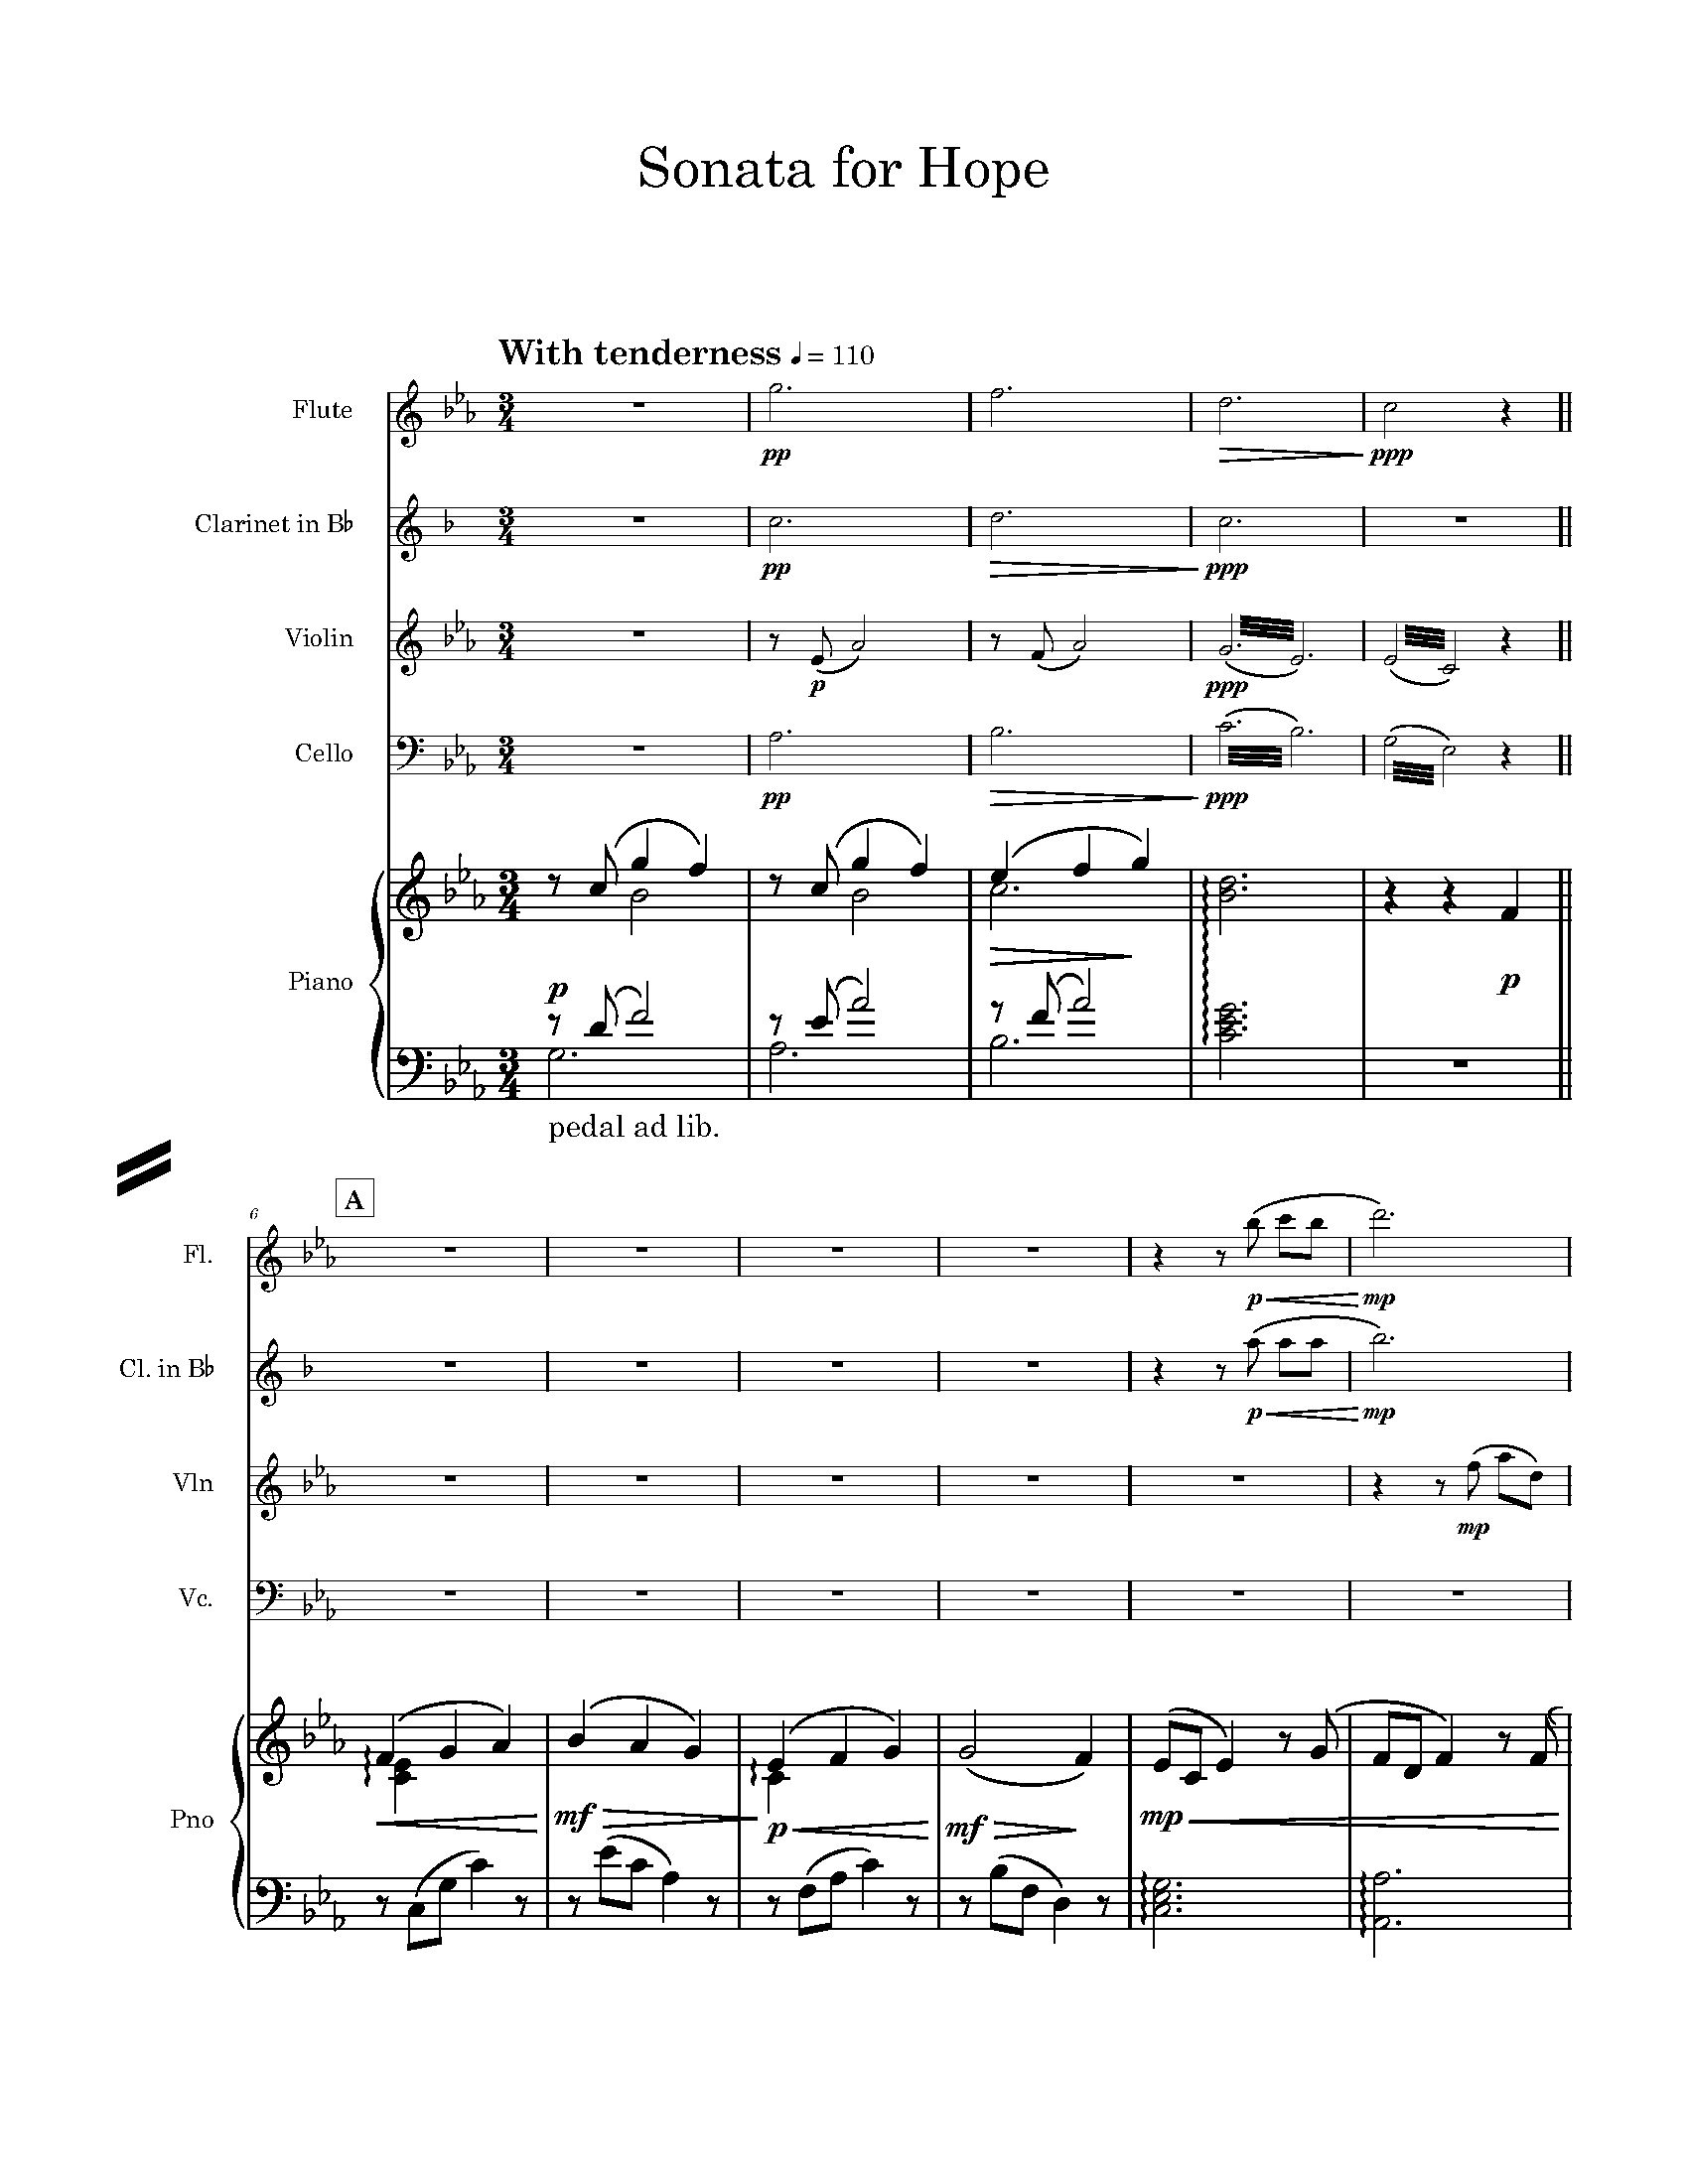 Sonata for Hope - Piano Score_Page_01.jpg